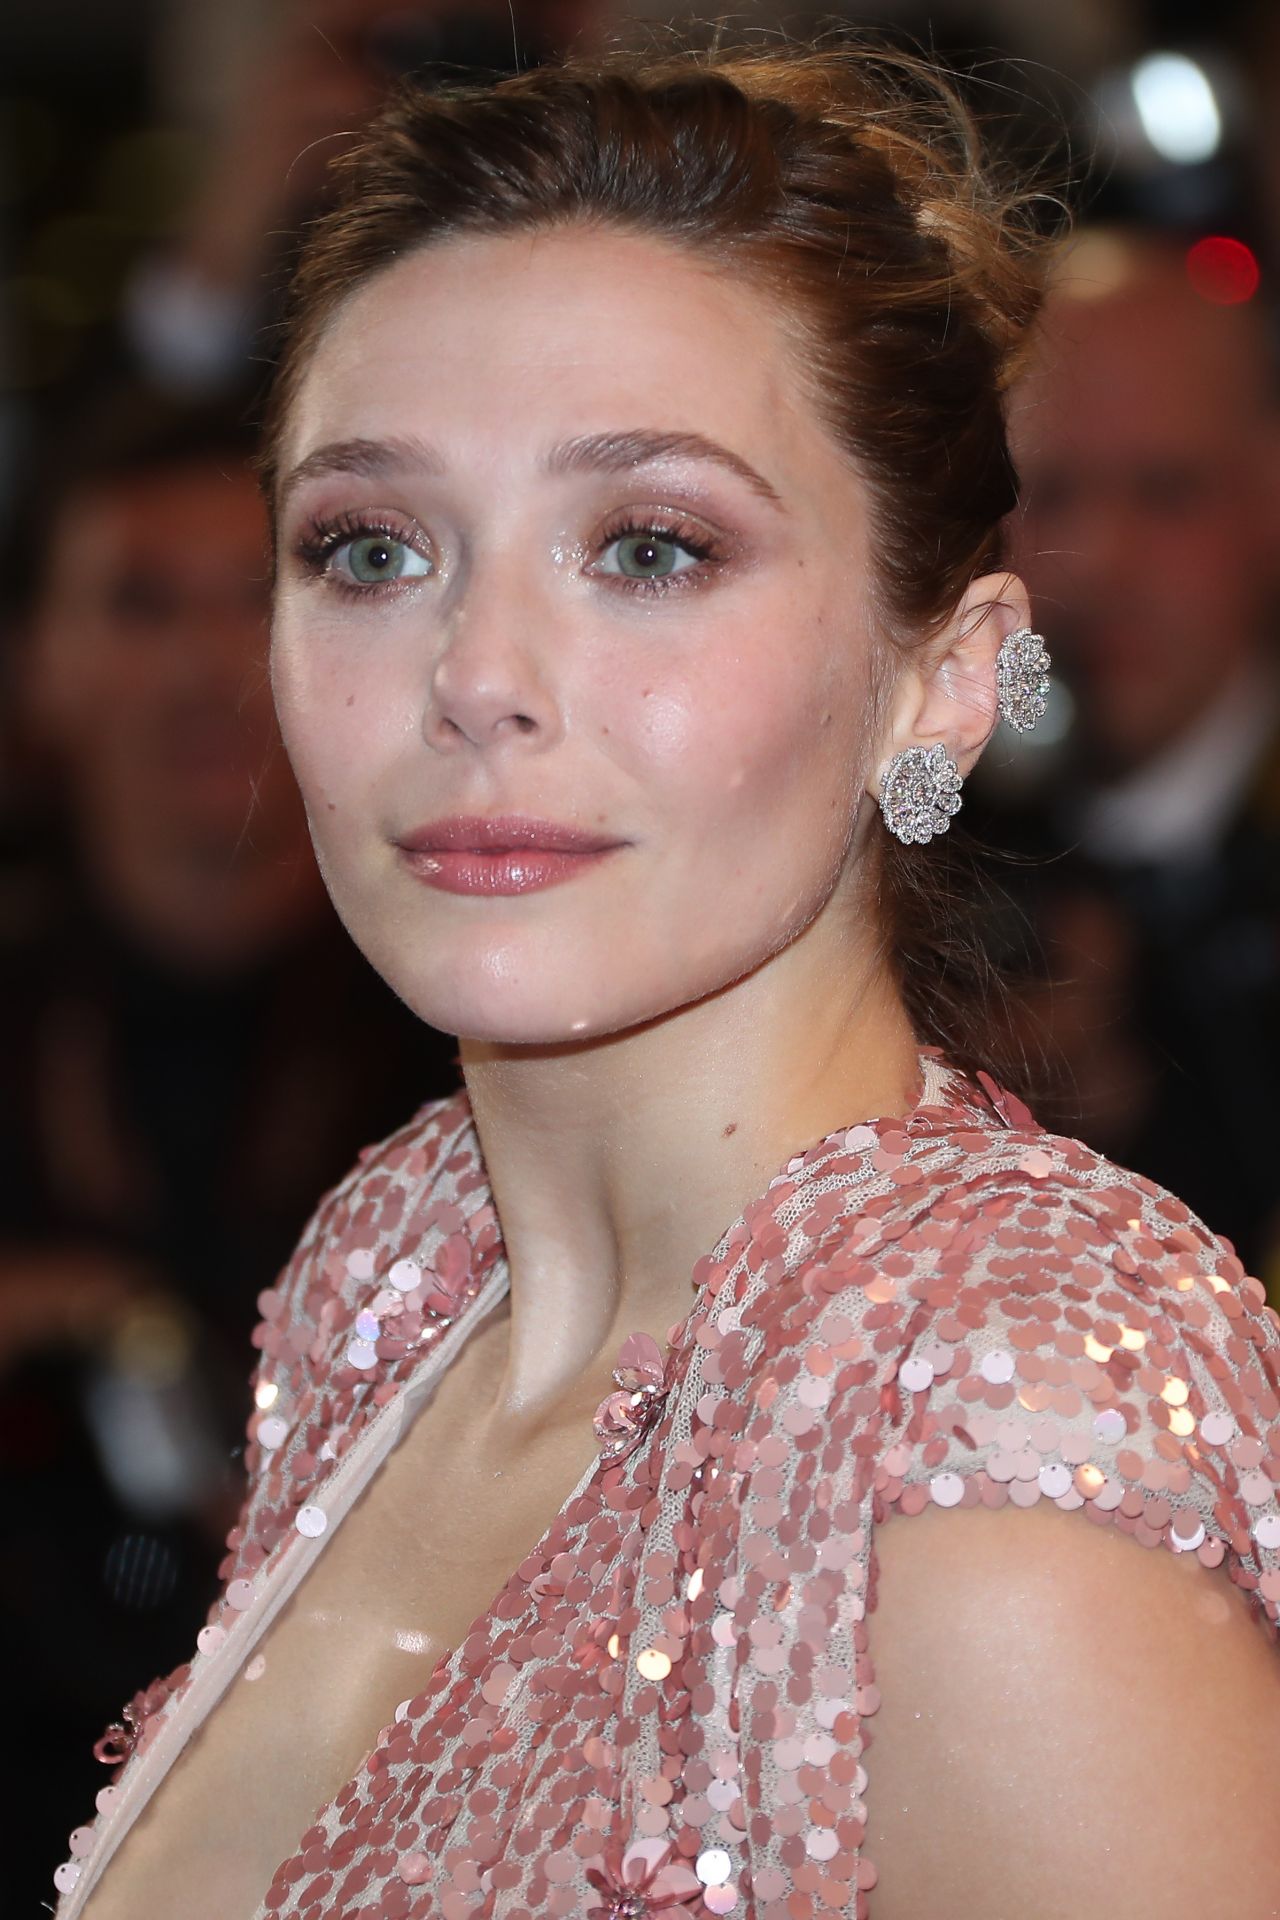 Elizabeth Olsen on Red Carpet – “The Square” Screening at Cannes Film